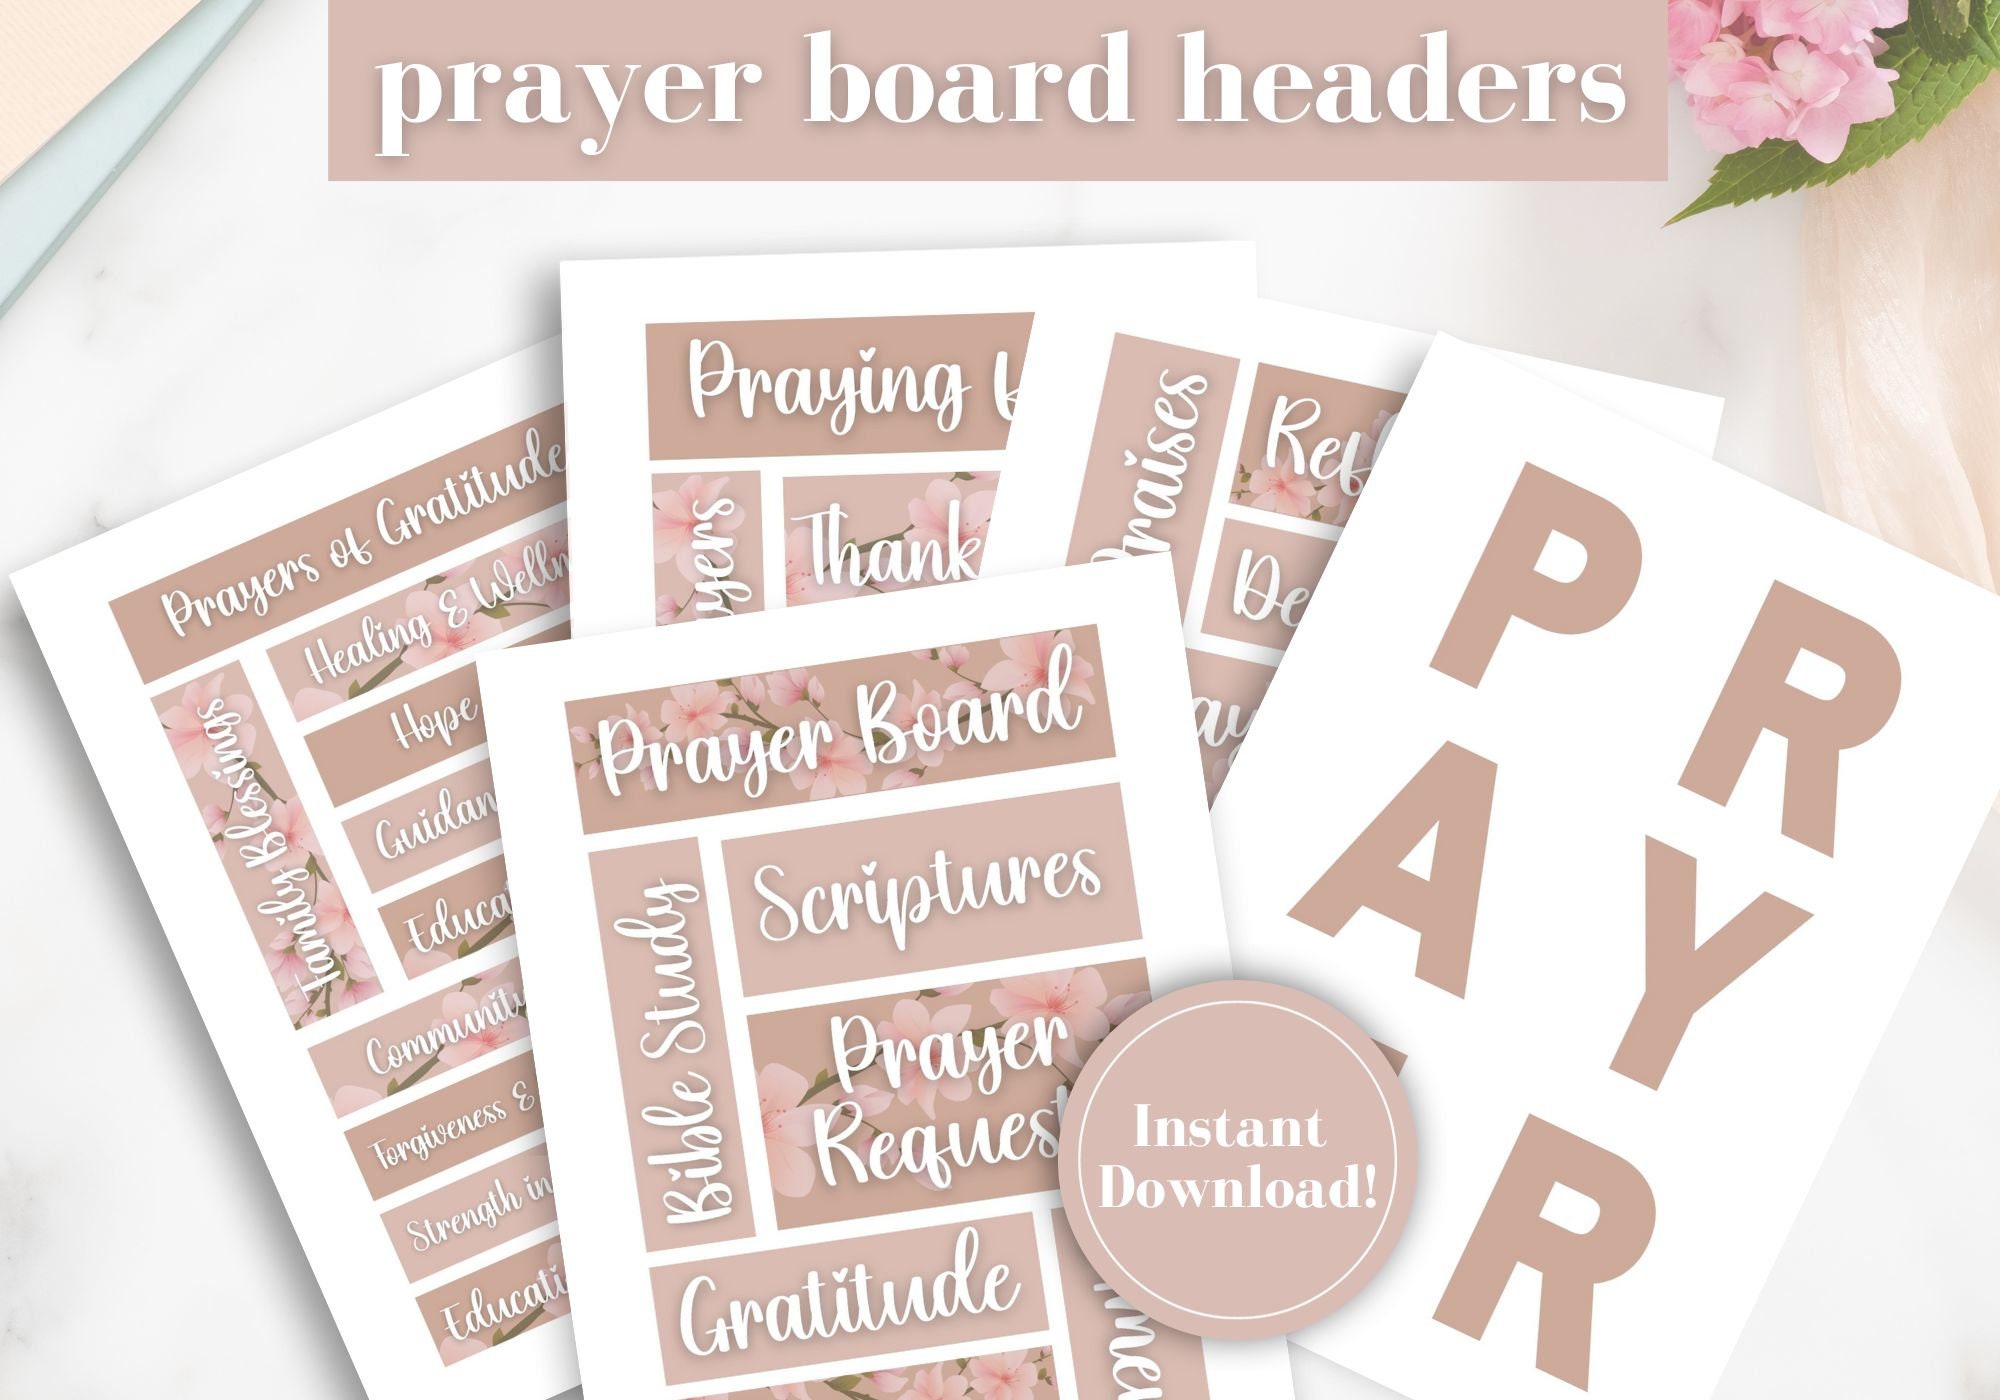 Printable Prayer Board Kit, Prayer Cards, Christian Wall Collage, Bible  Verses, Scripture on Prayer Enhance Your Prayer Life 